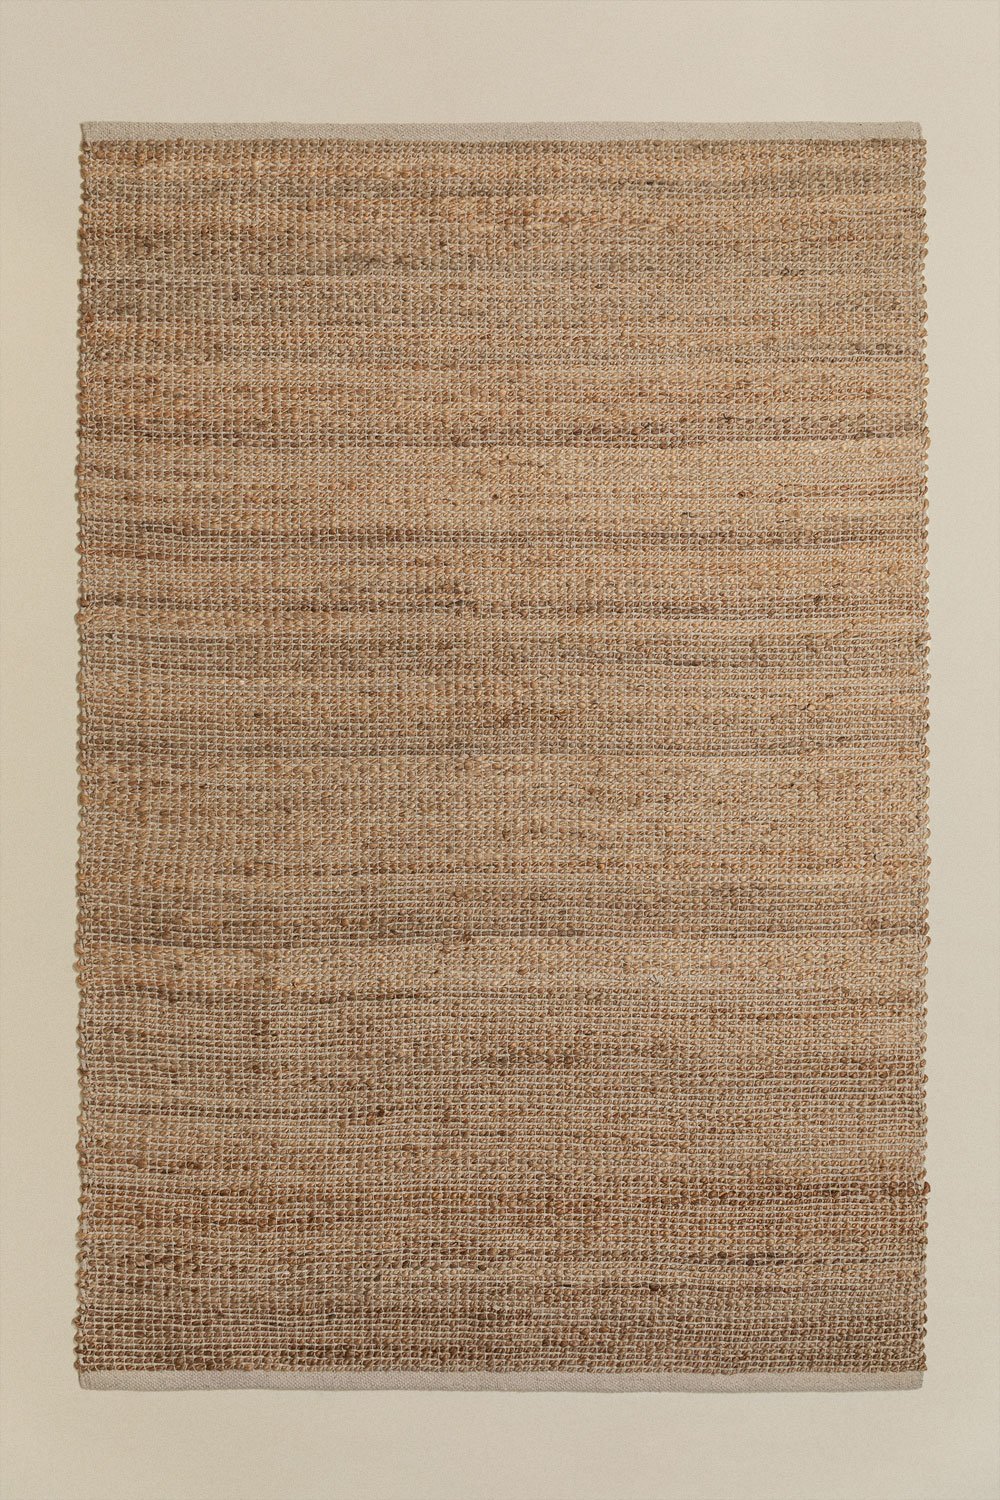 Jute vloerkleed (180x120 cm) Casard, galerij beeld 1